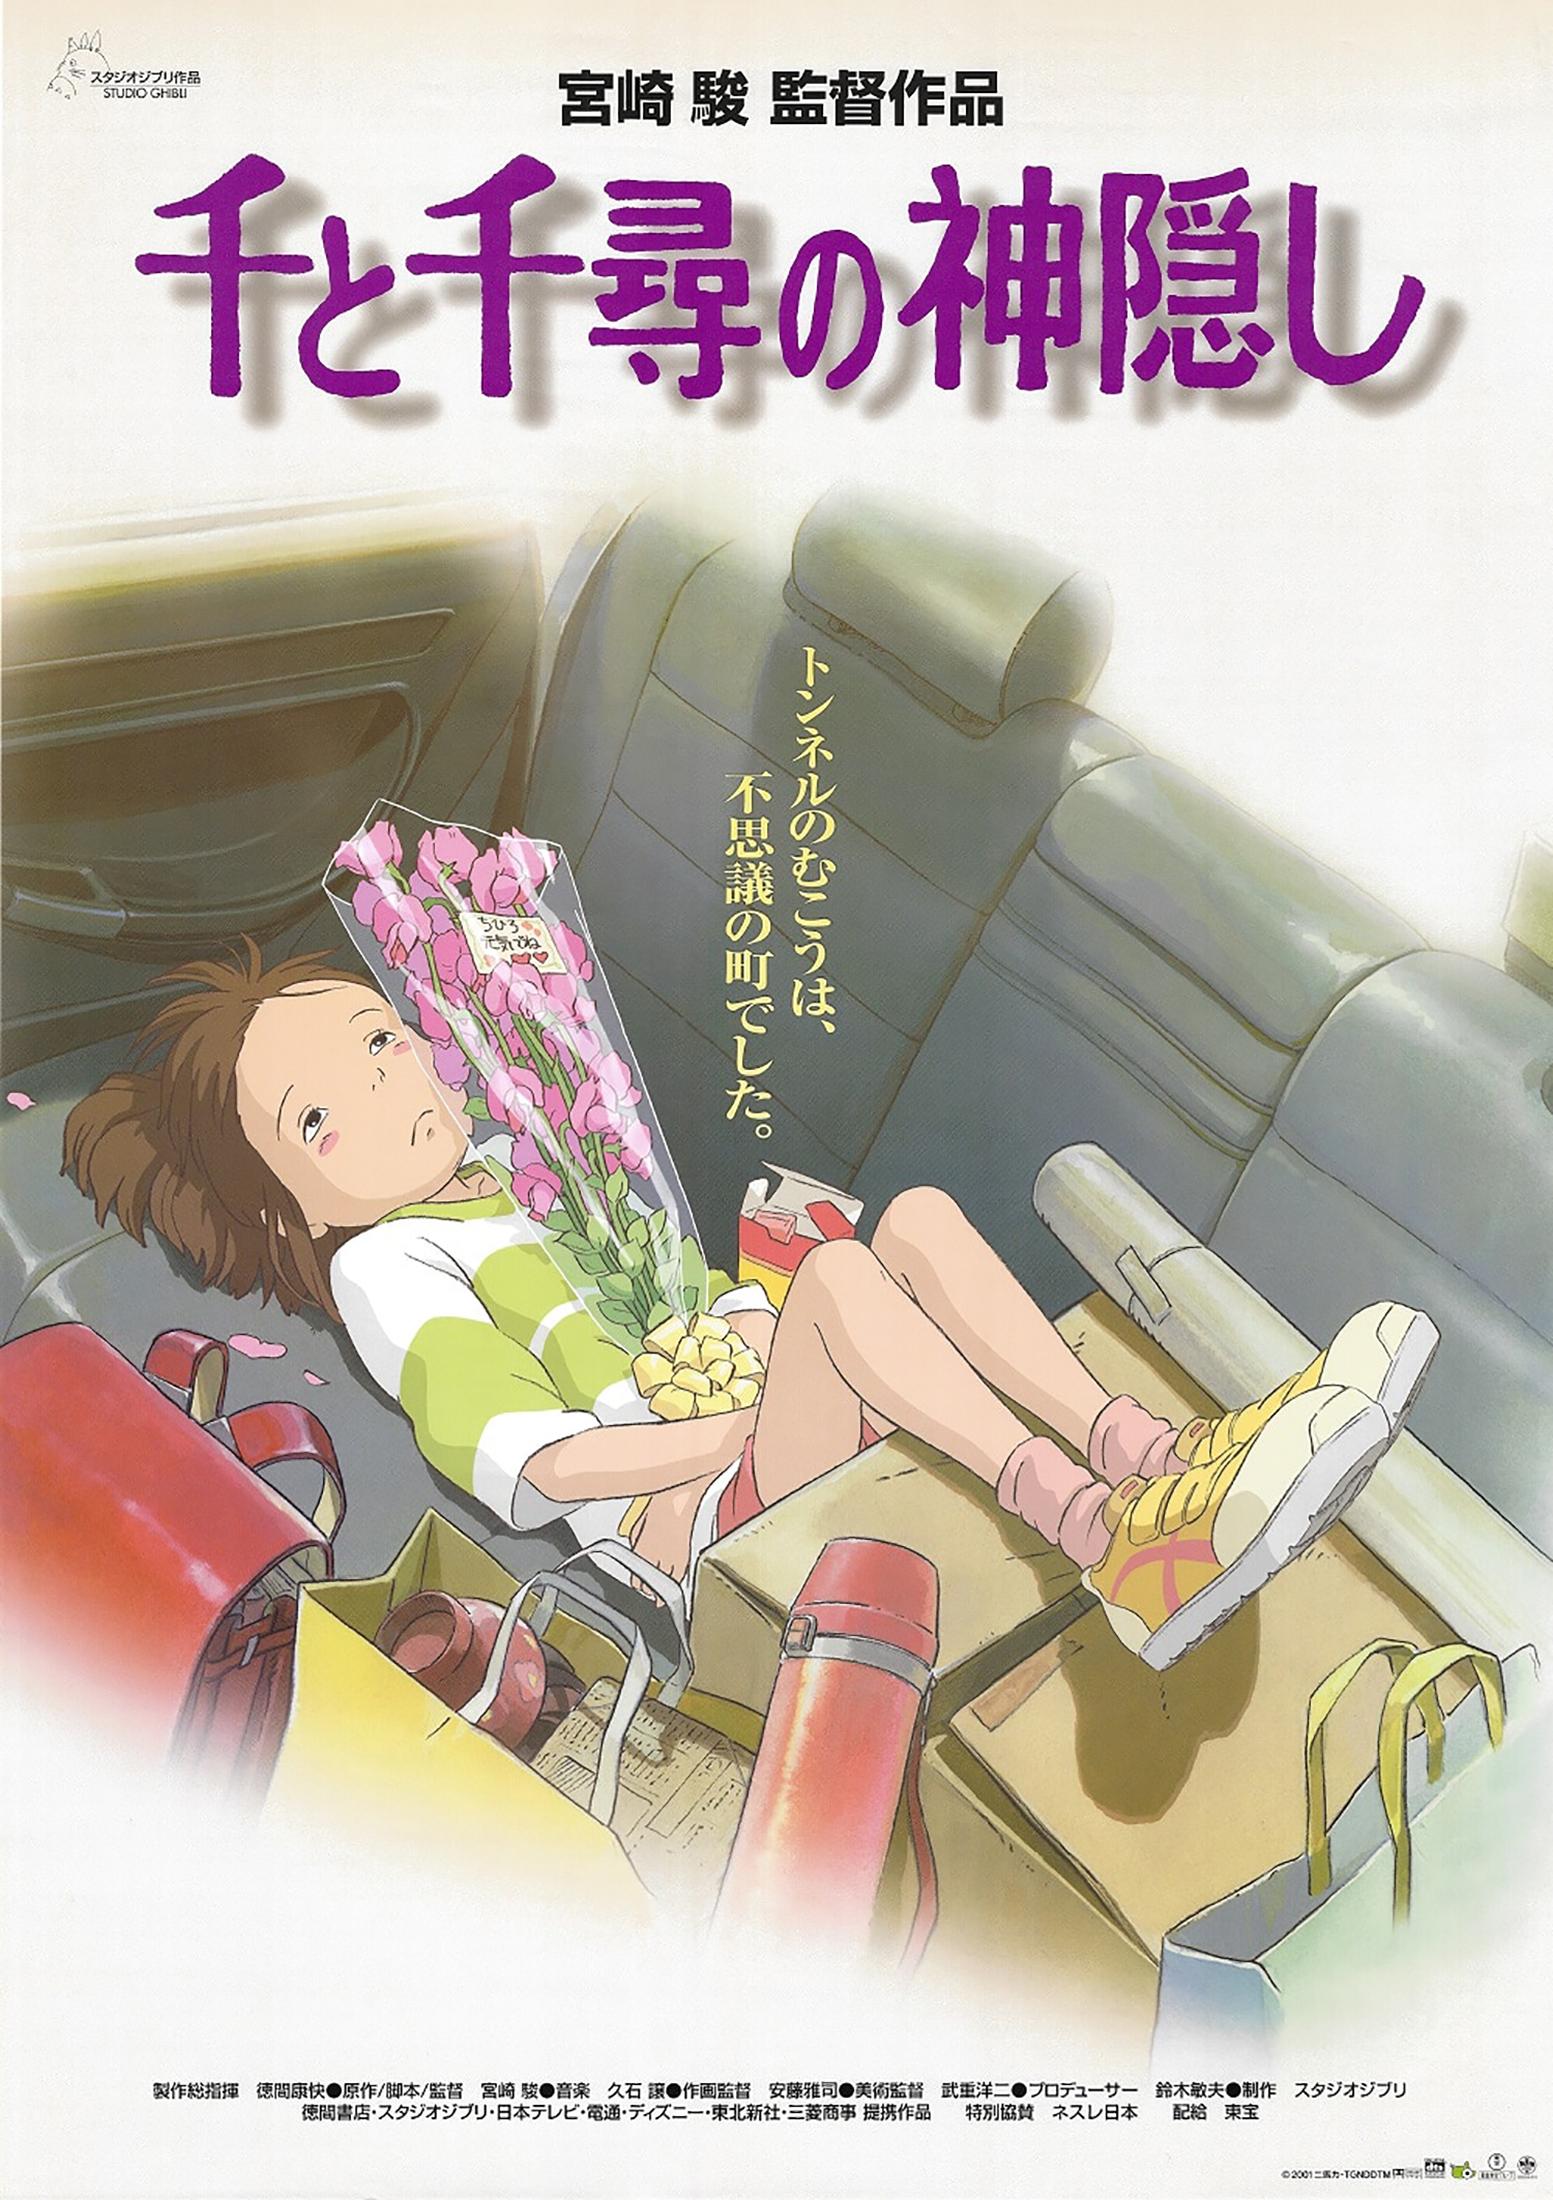 Unknown Print - Spirited Away Original Vintage Movie Poster, Studio Ghibli (2001), Miyazaki